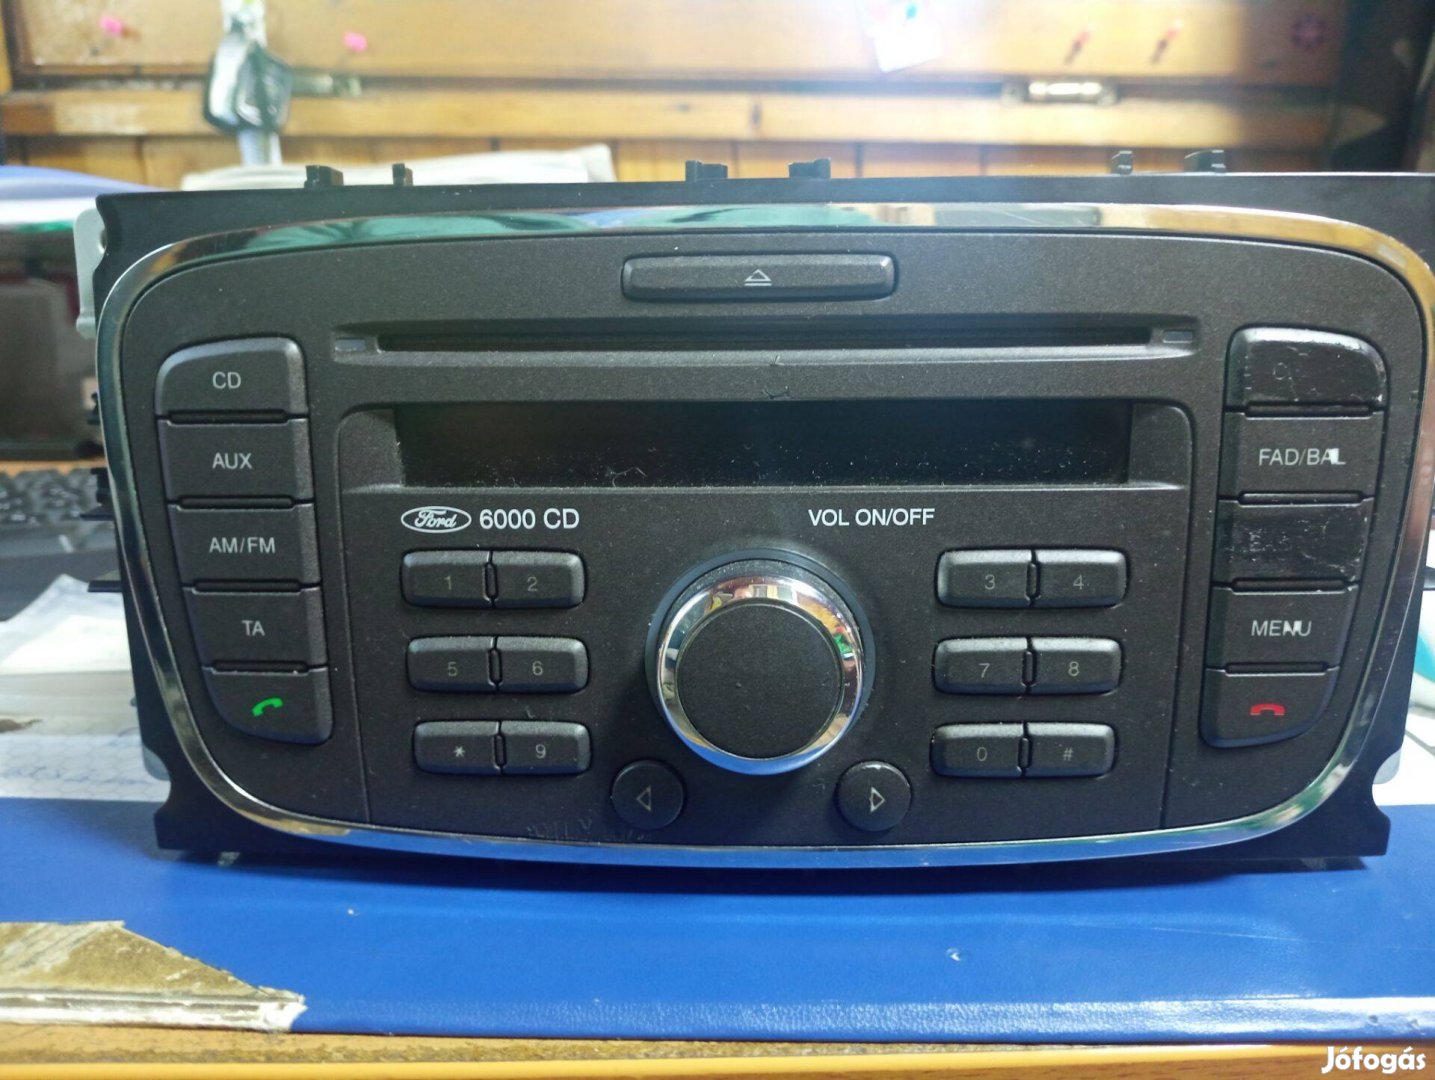 Ford Focus 6000 CD rádió